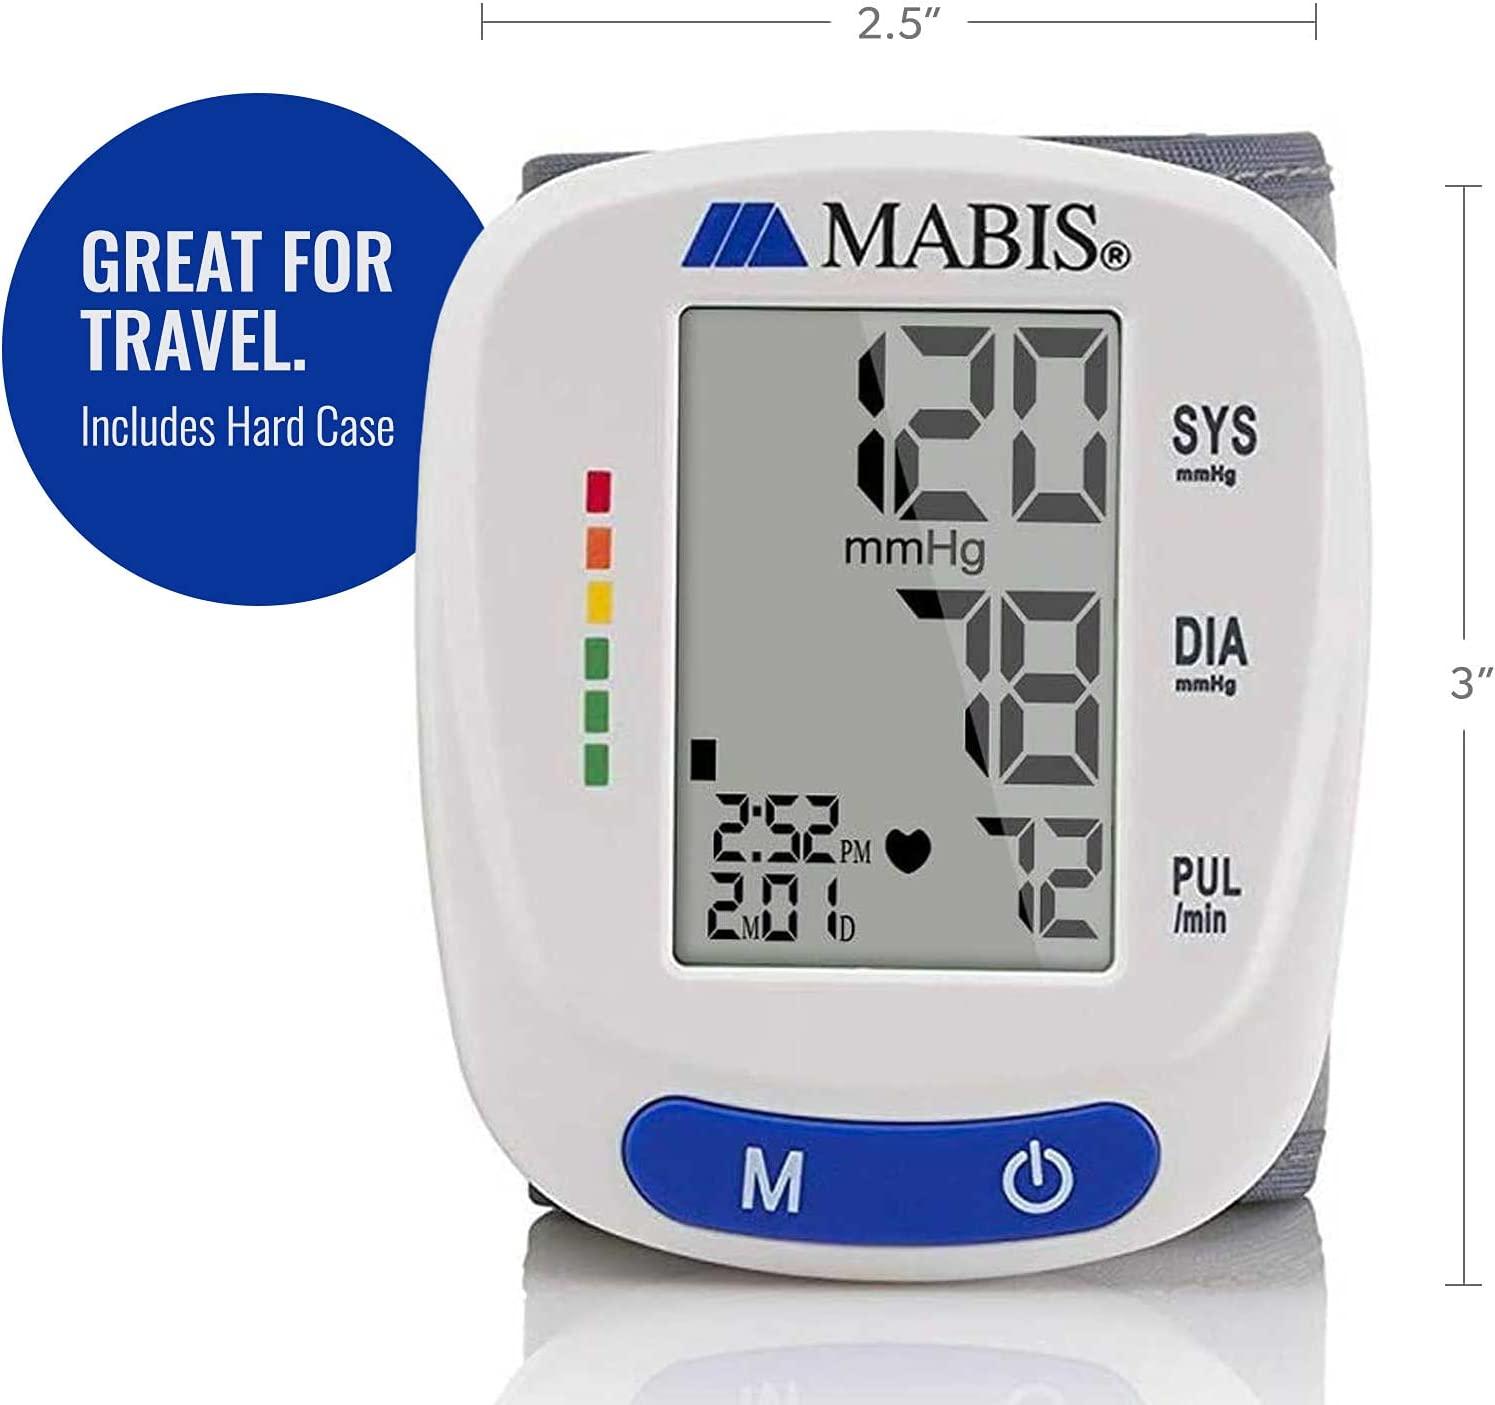 HealthSmart Standard Series Wrist Blood Pressure Monitor AM-04-810